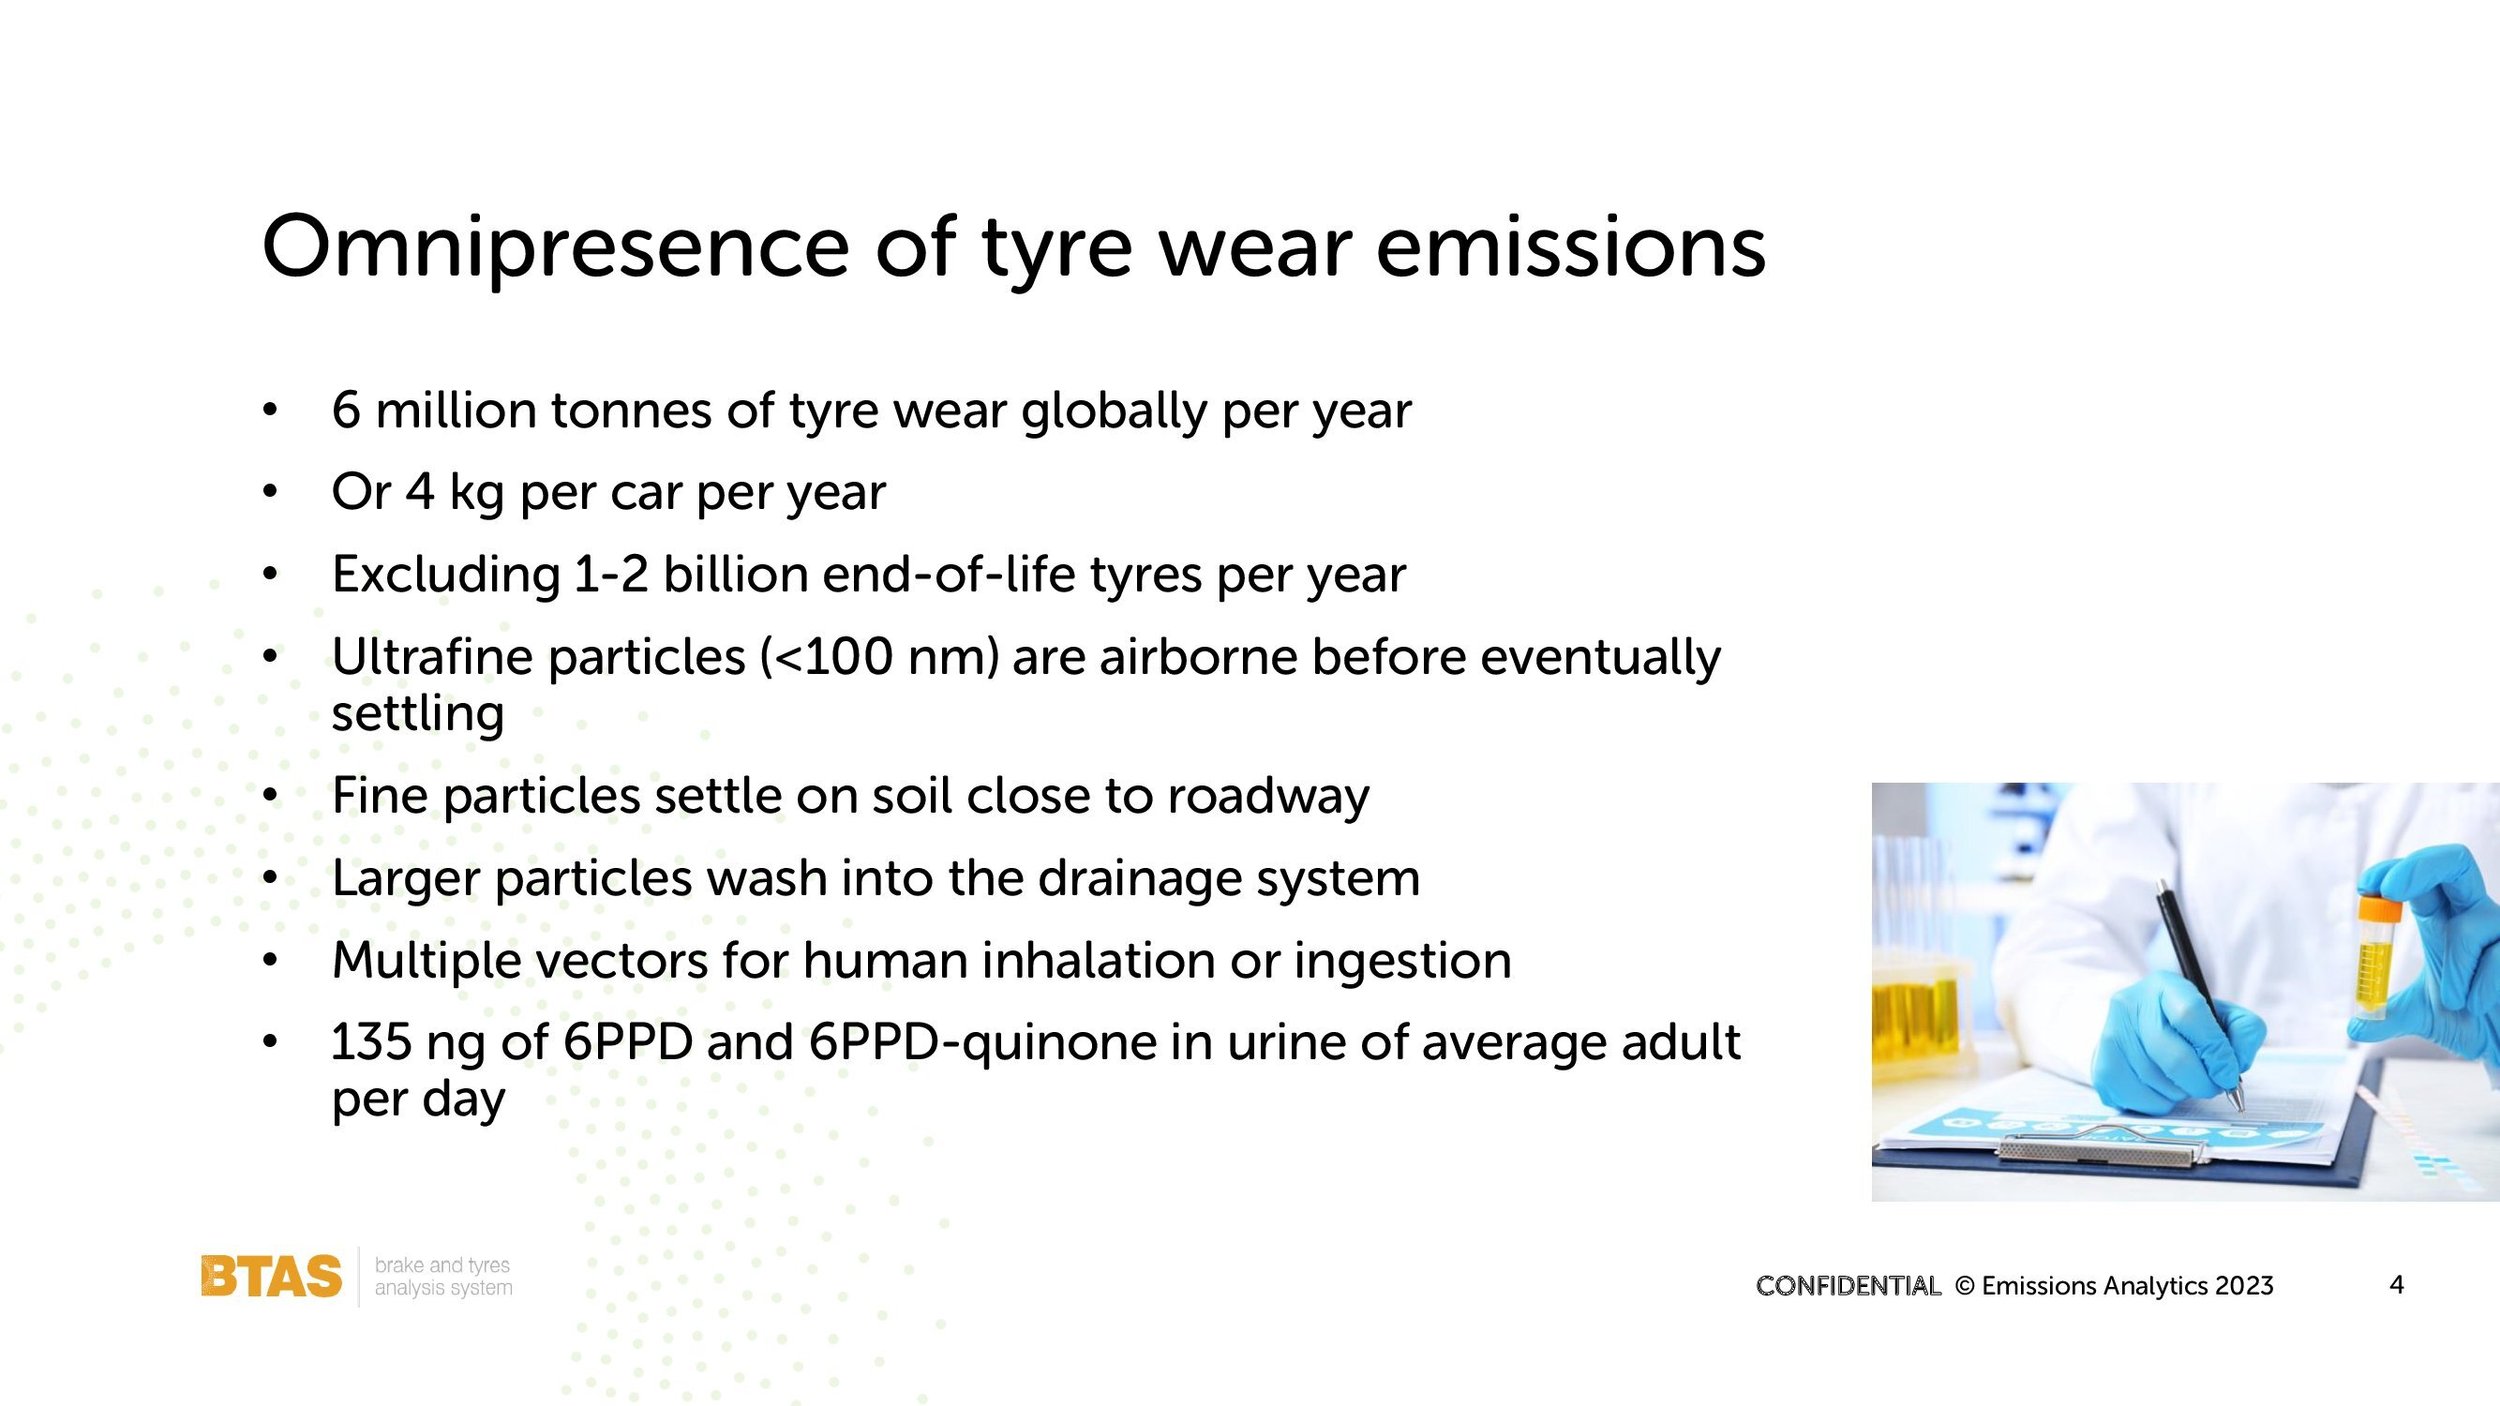 Nick Molden Emissions Analytics TTE presentation March 2023_00004.jpg